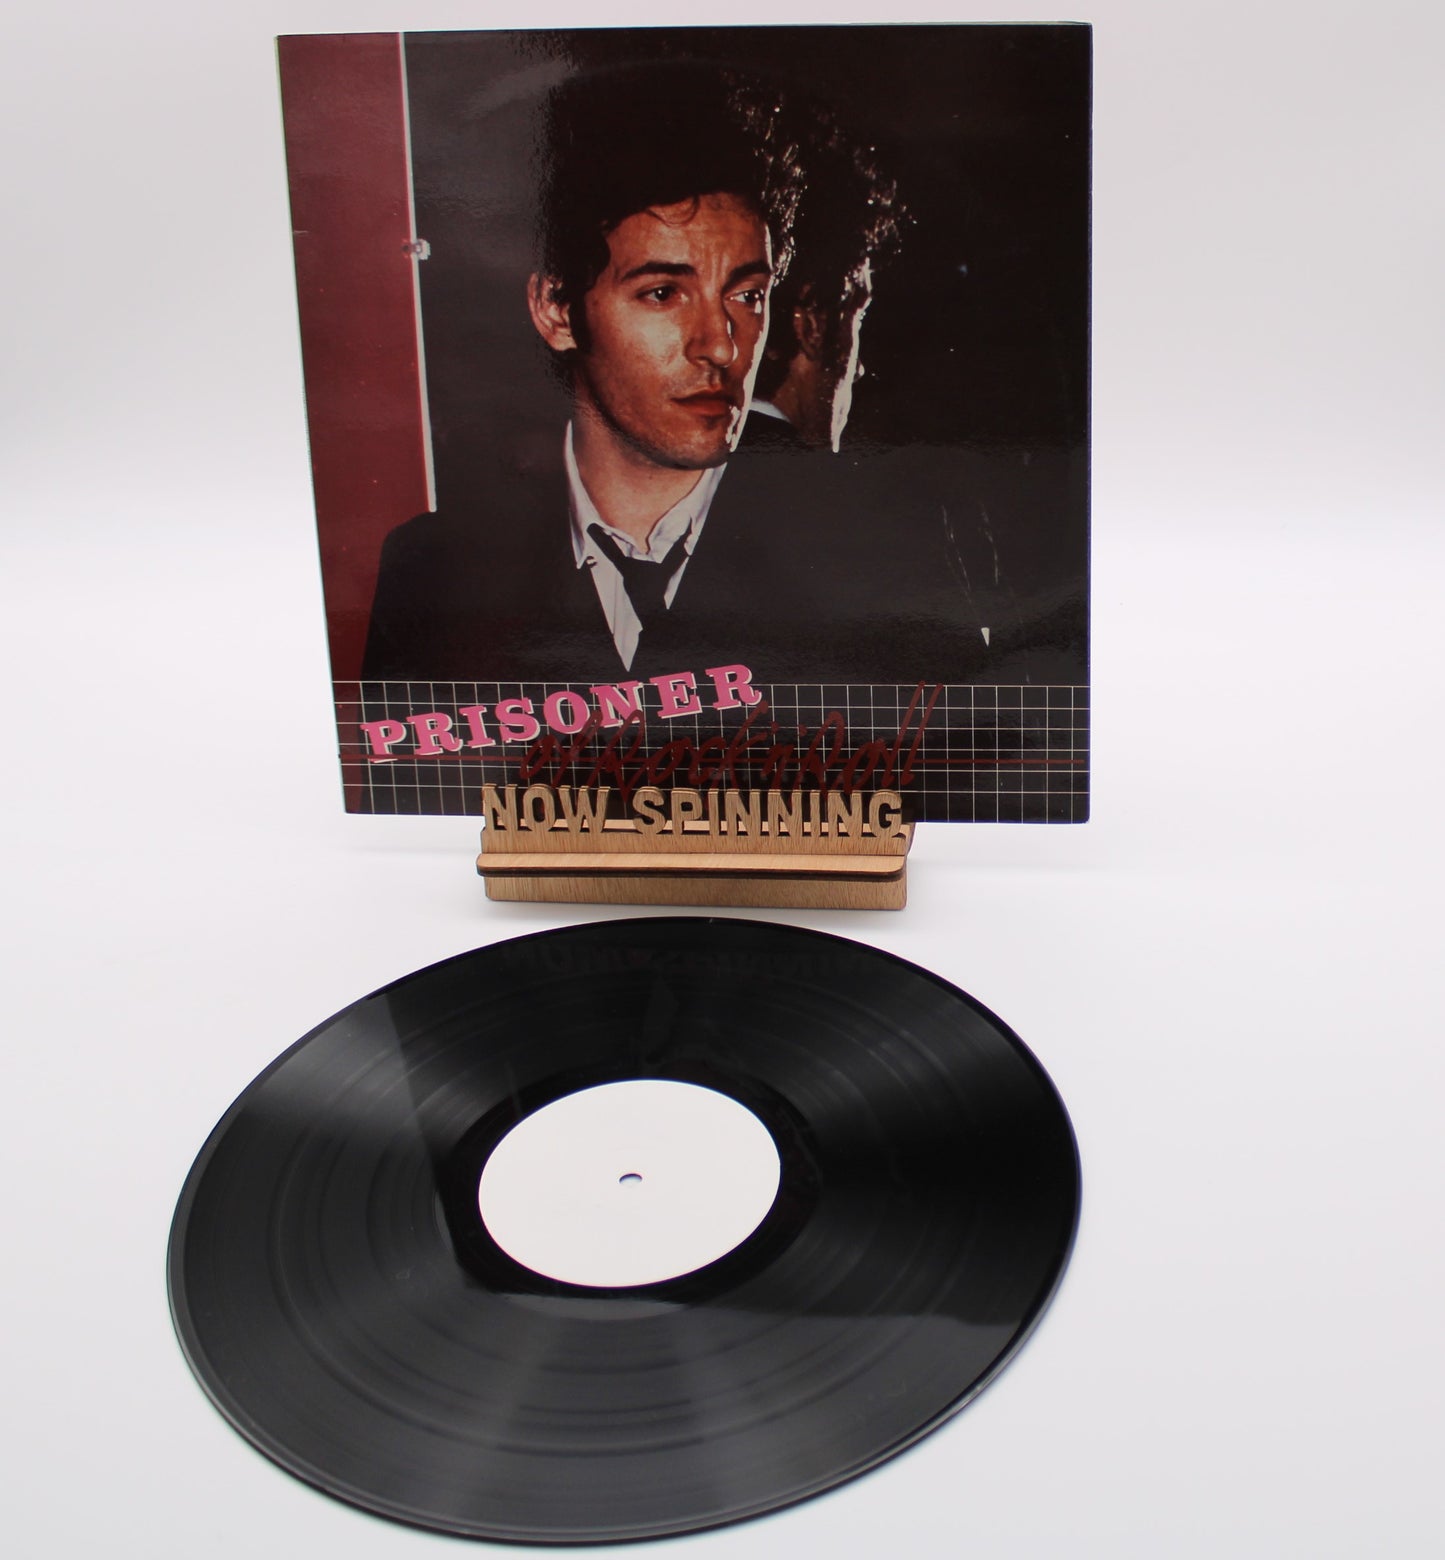 Bruce Springsteen - Prisoner Of Rock 'N' Roll - 12" Vinyl - Near Mint - BLV